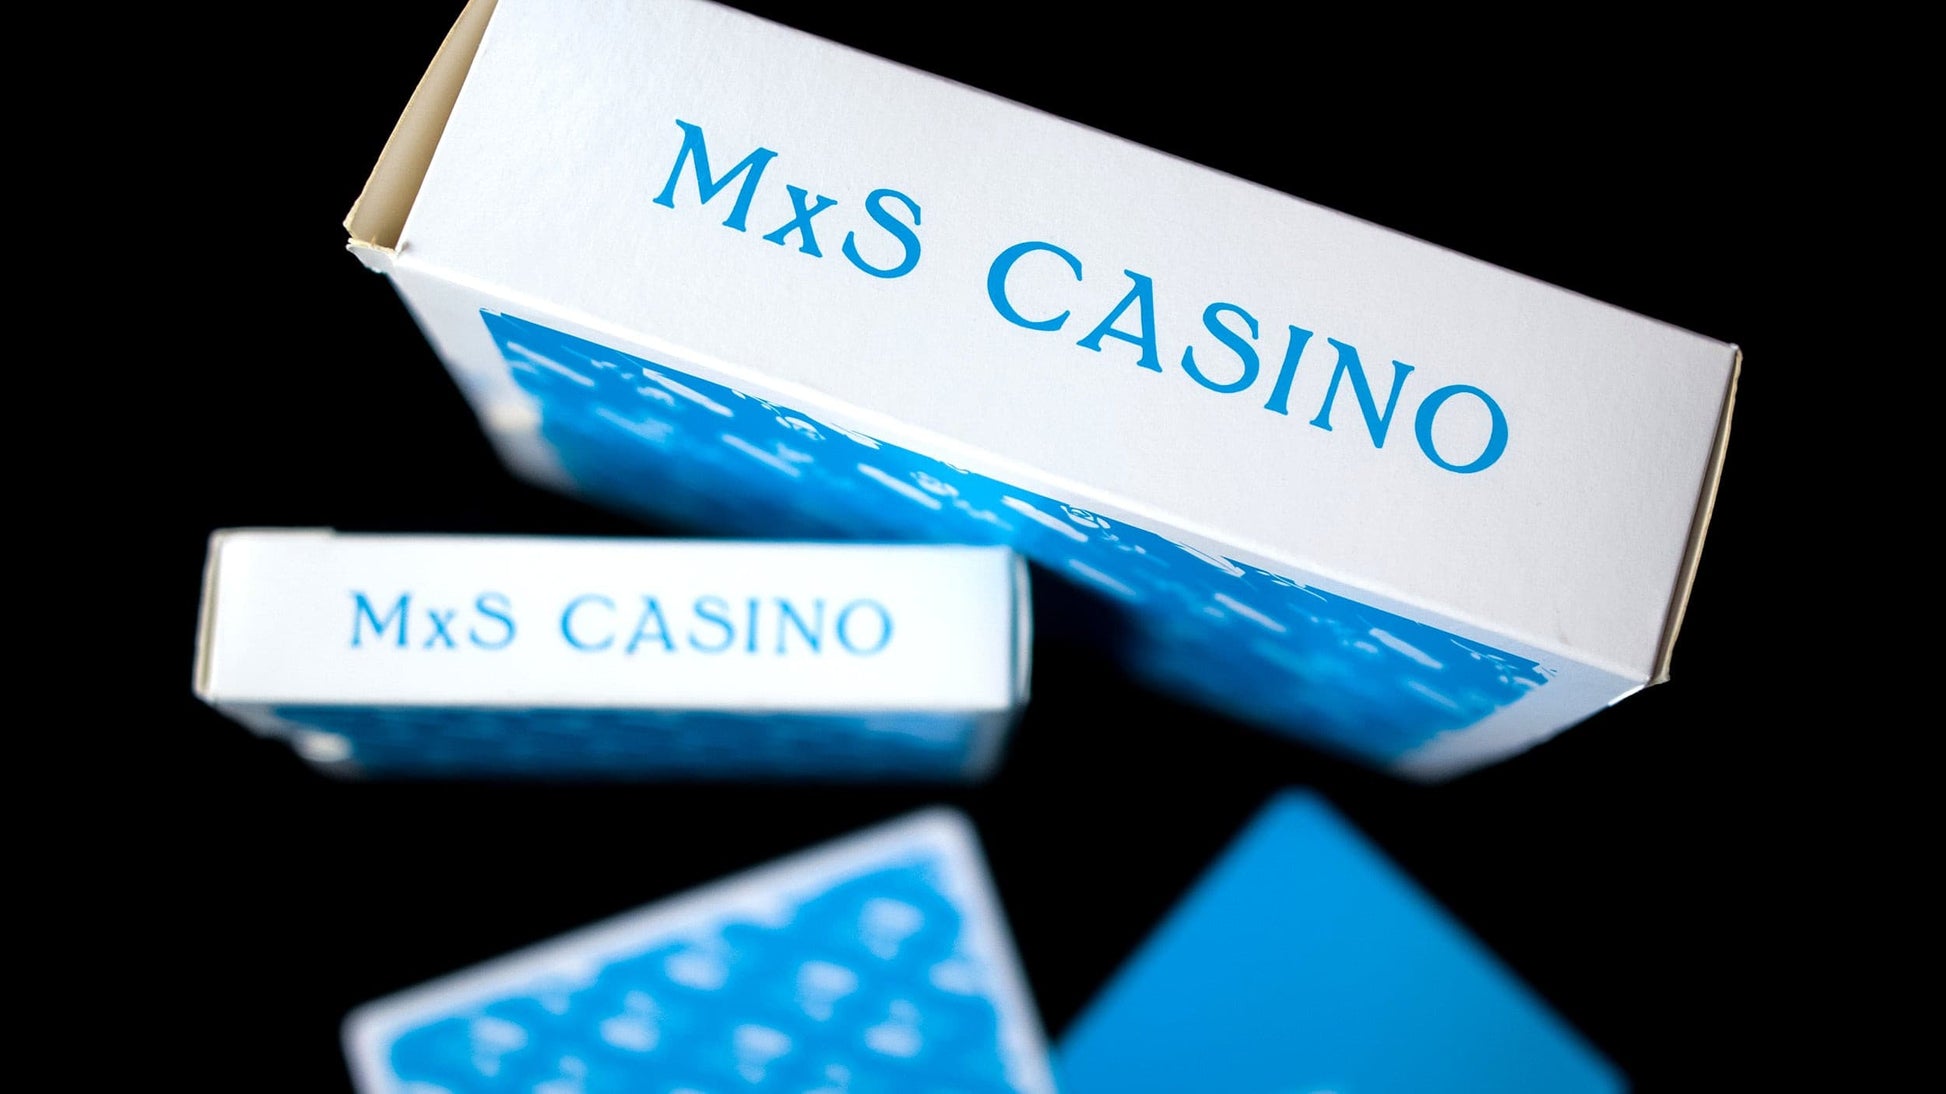 MxS Casino